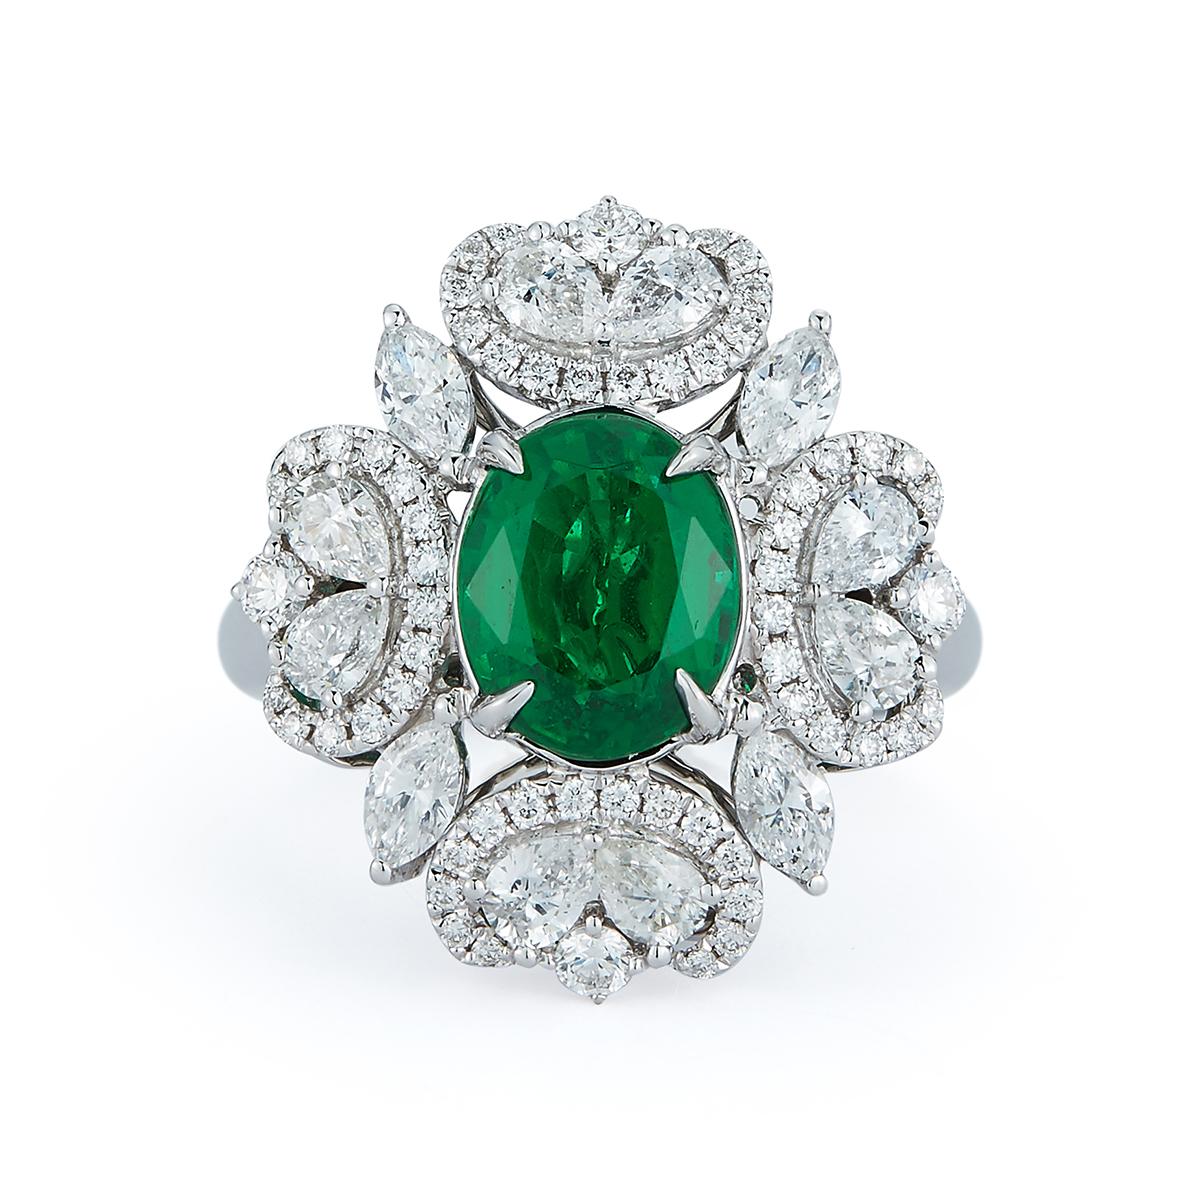 Elaborate diamond scroll designs surround a beautiful oval emerald.
Item:	# 02770
Setting:	18K W
Lab:	GRS
Color Weight:	2.18 ct. of Emerald
Diamond Weight:	1.47 ct. of Di